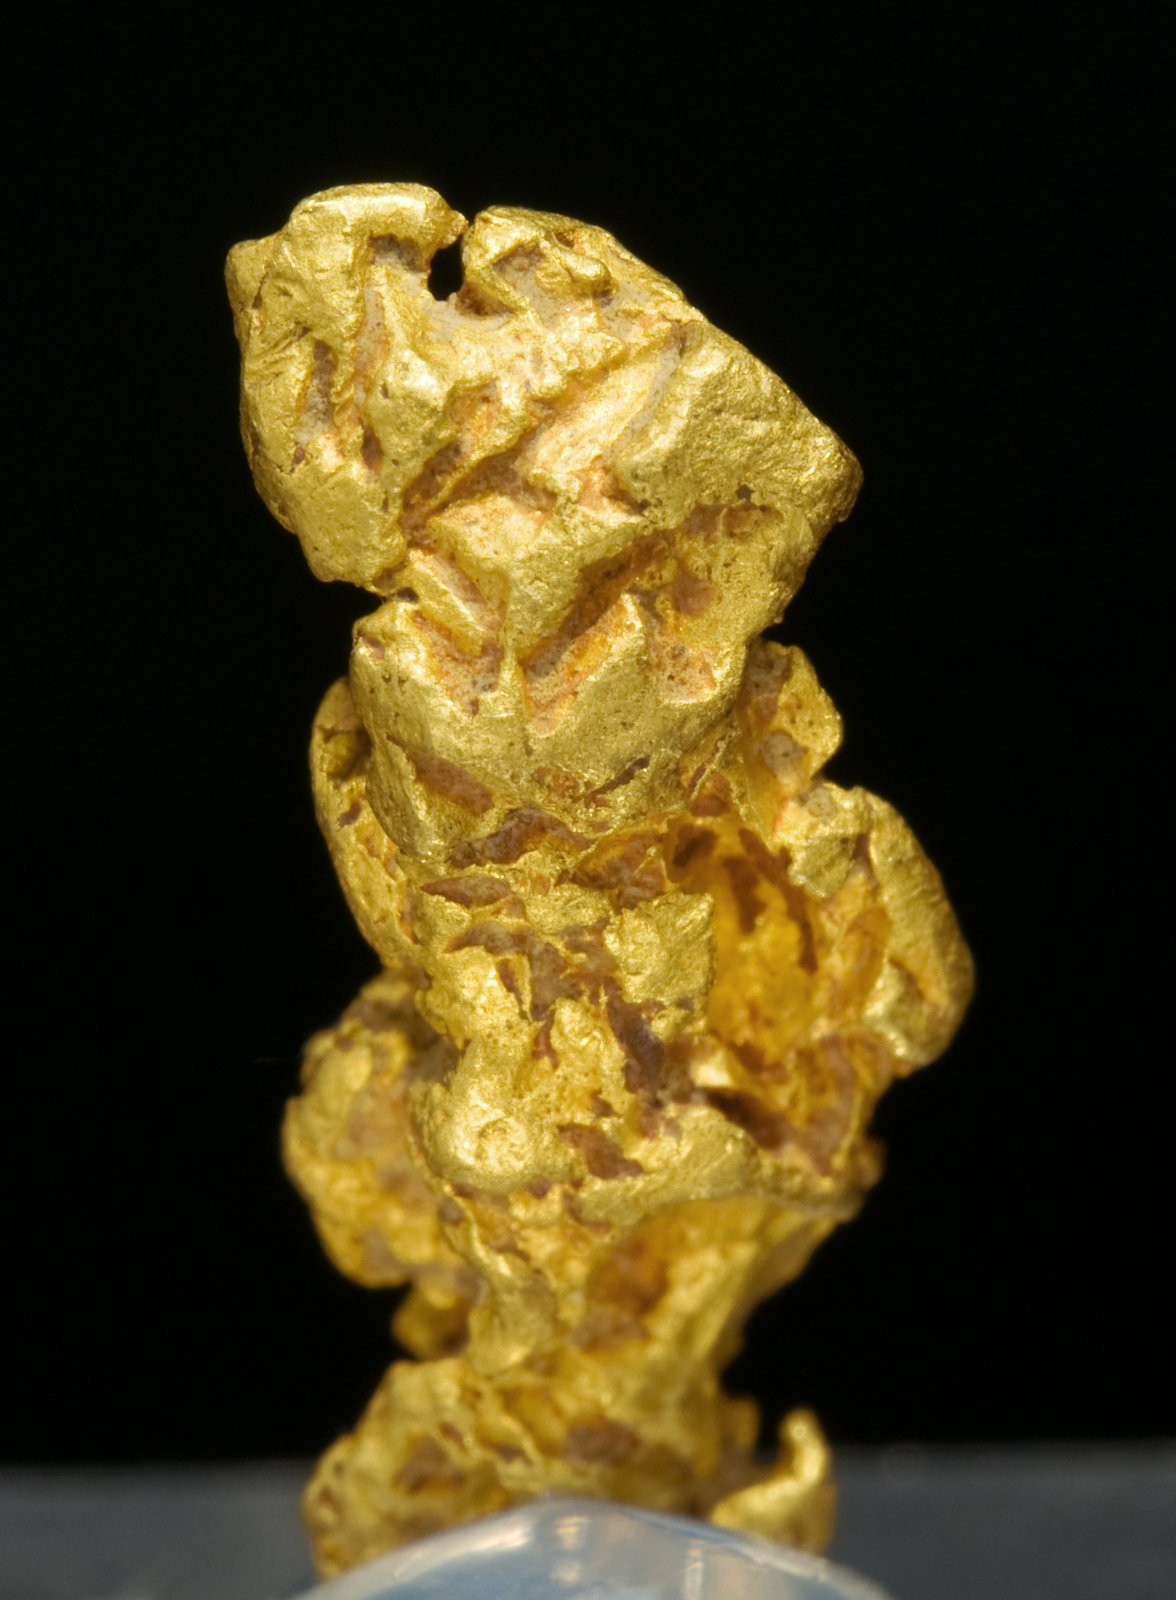 specimens/s_imagesS1/Gold-NA27S1r.jpg